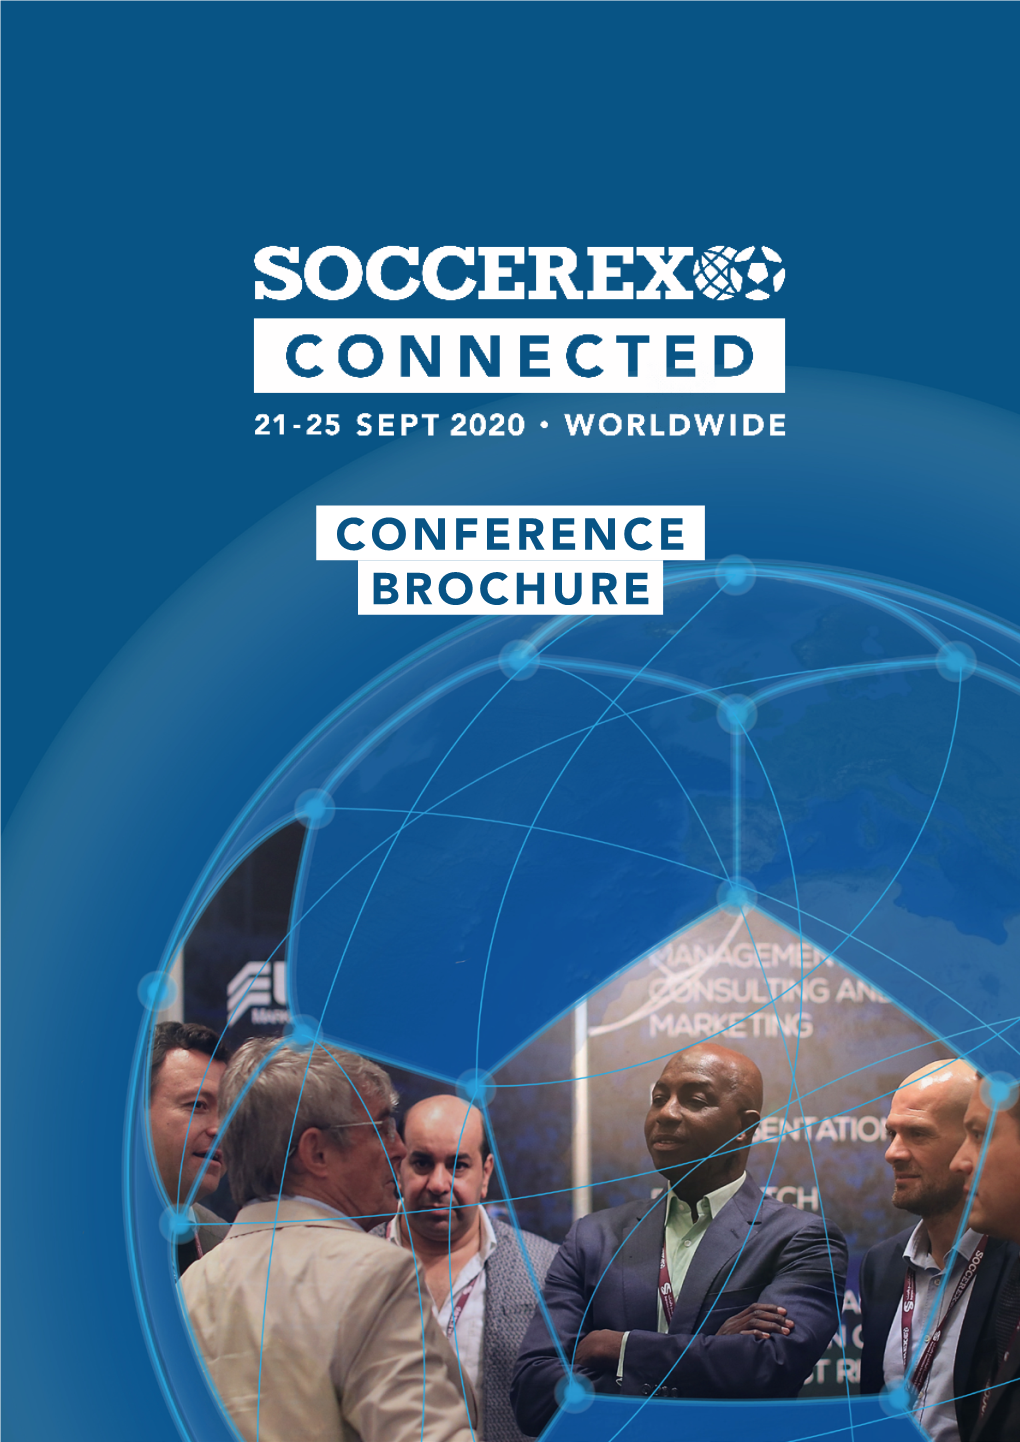 Conference Brochure Confirmed Speakers